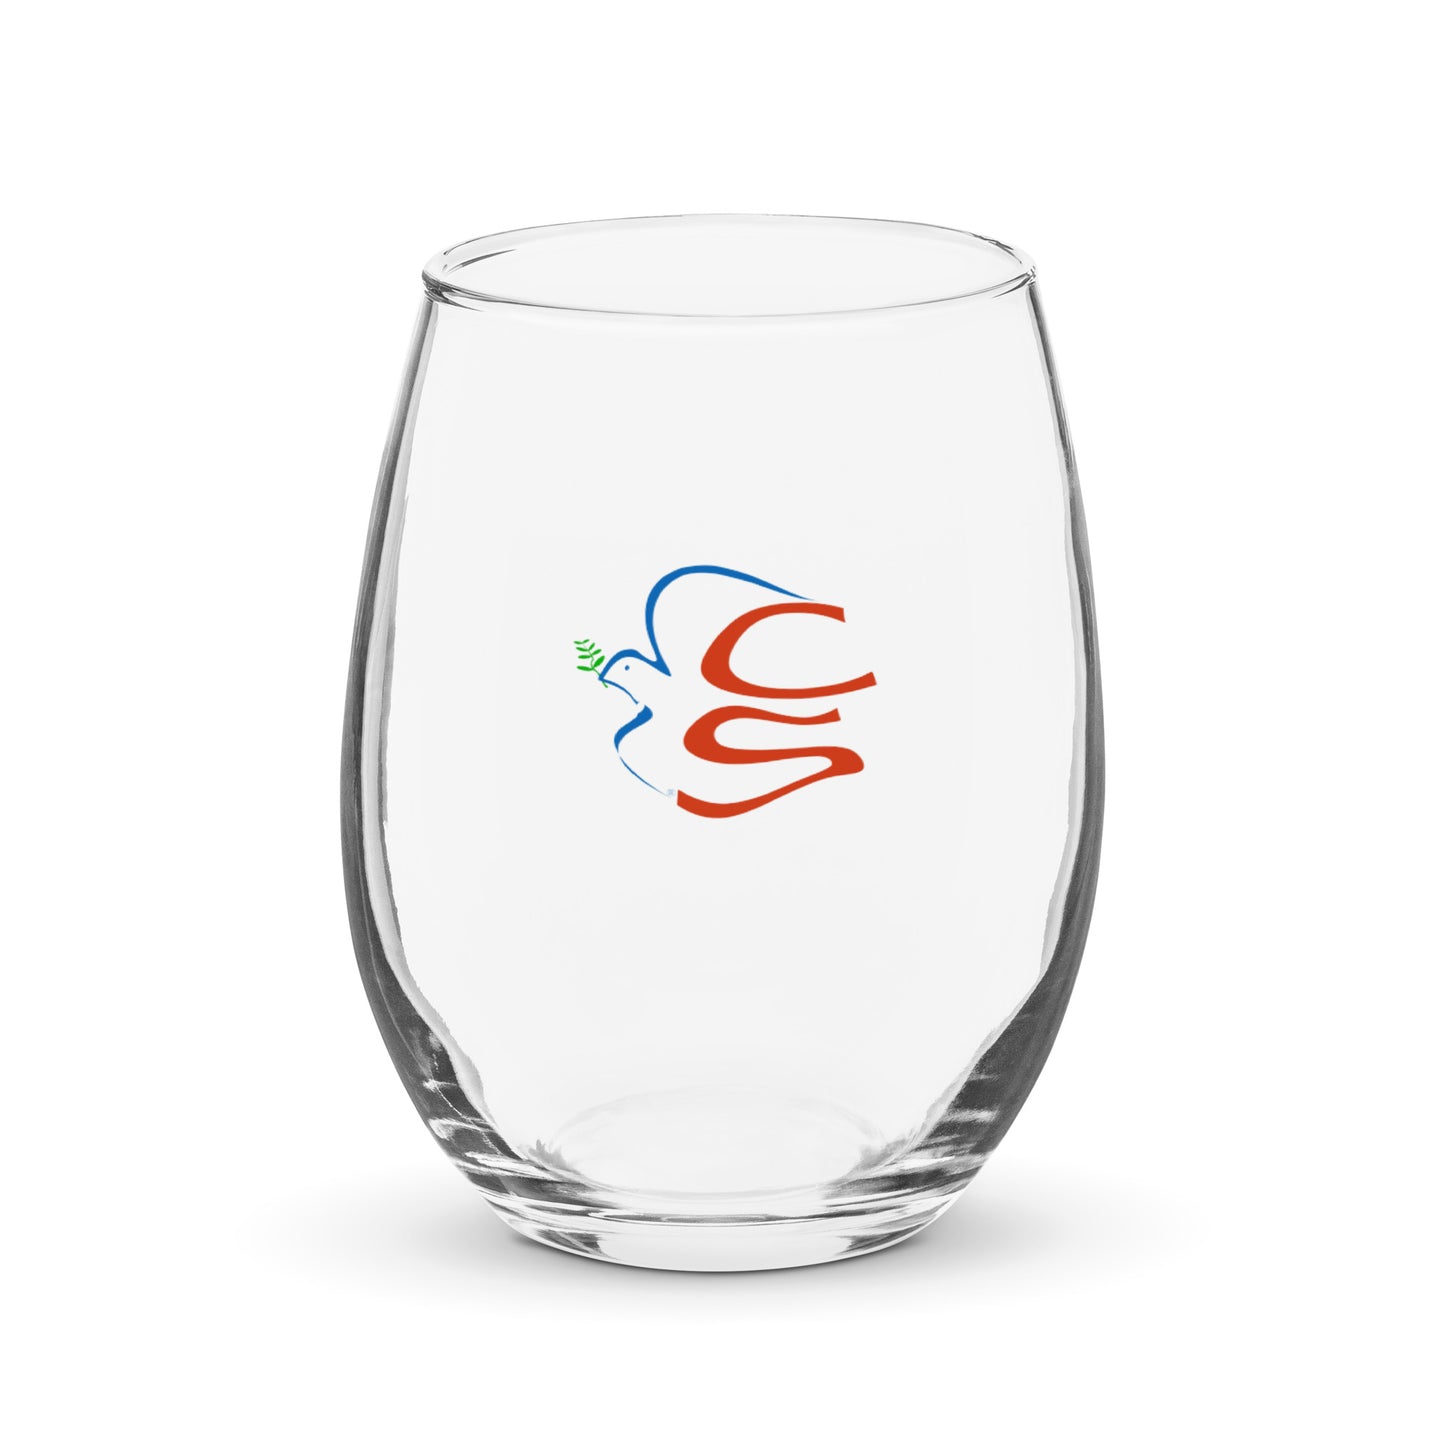 Stemless wine glass with Cabela and Schmitt logo